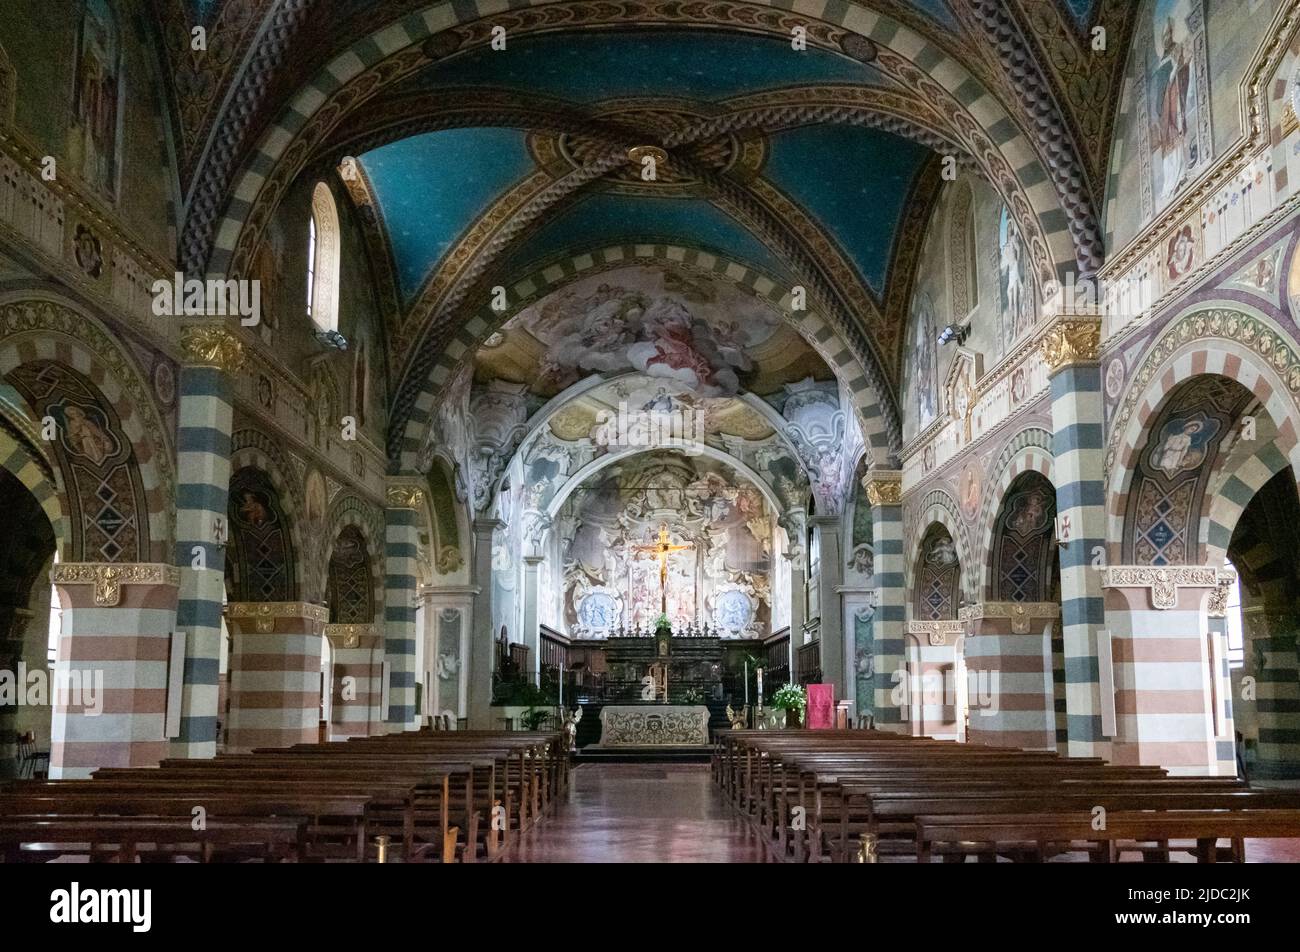 Bobbio, Italia - 24 de mayo de 2018: La nave de la catedral de Santa Maria Assunta con frescos del siglo XIX Foto de stock